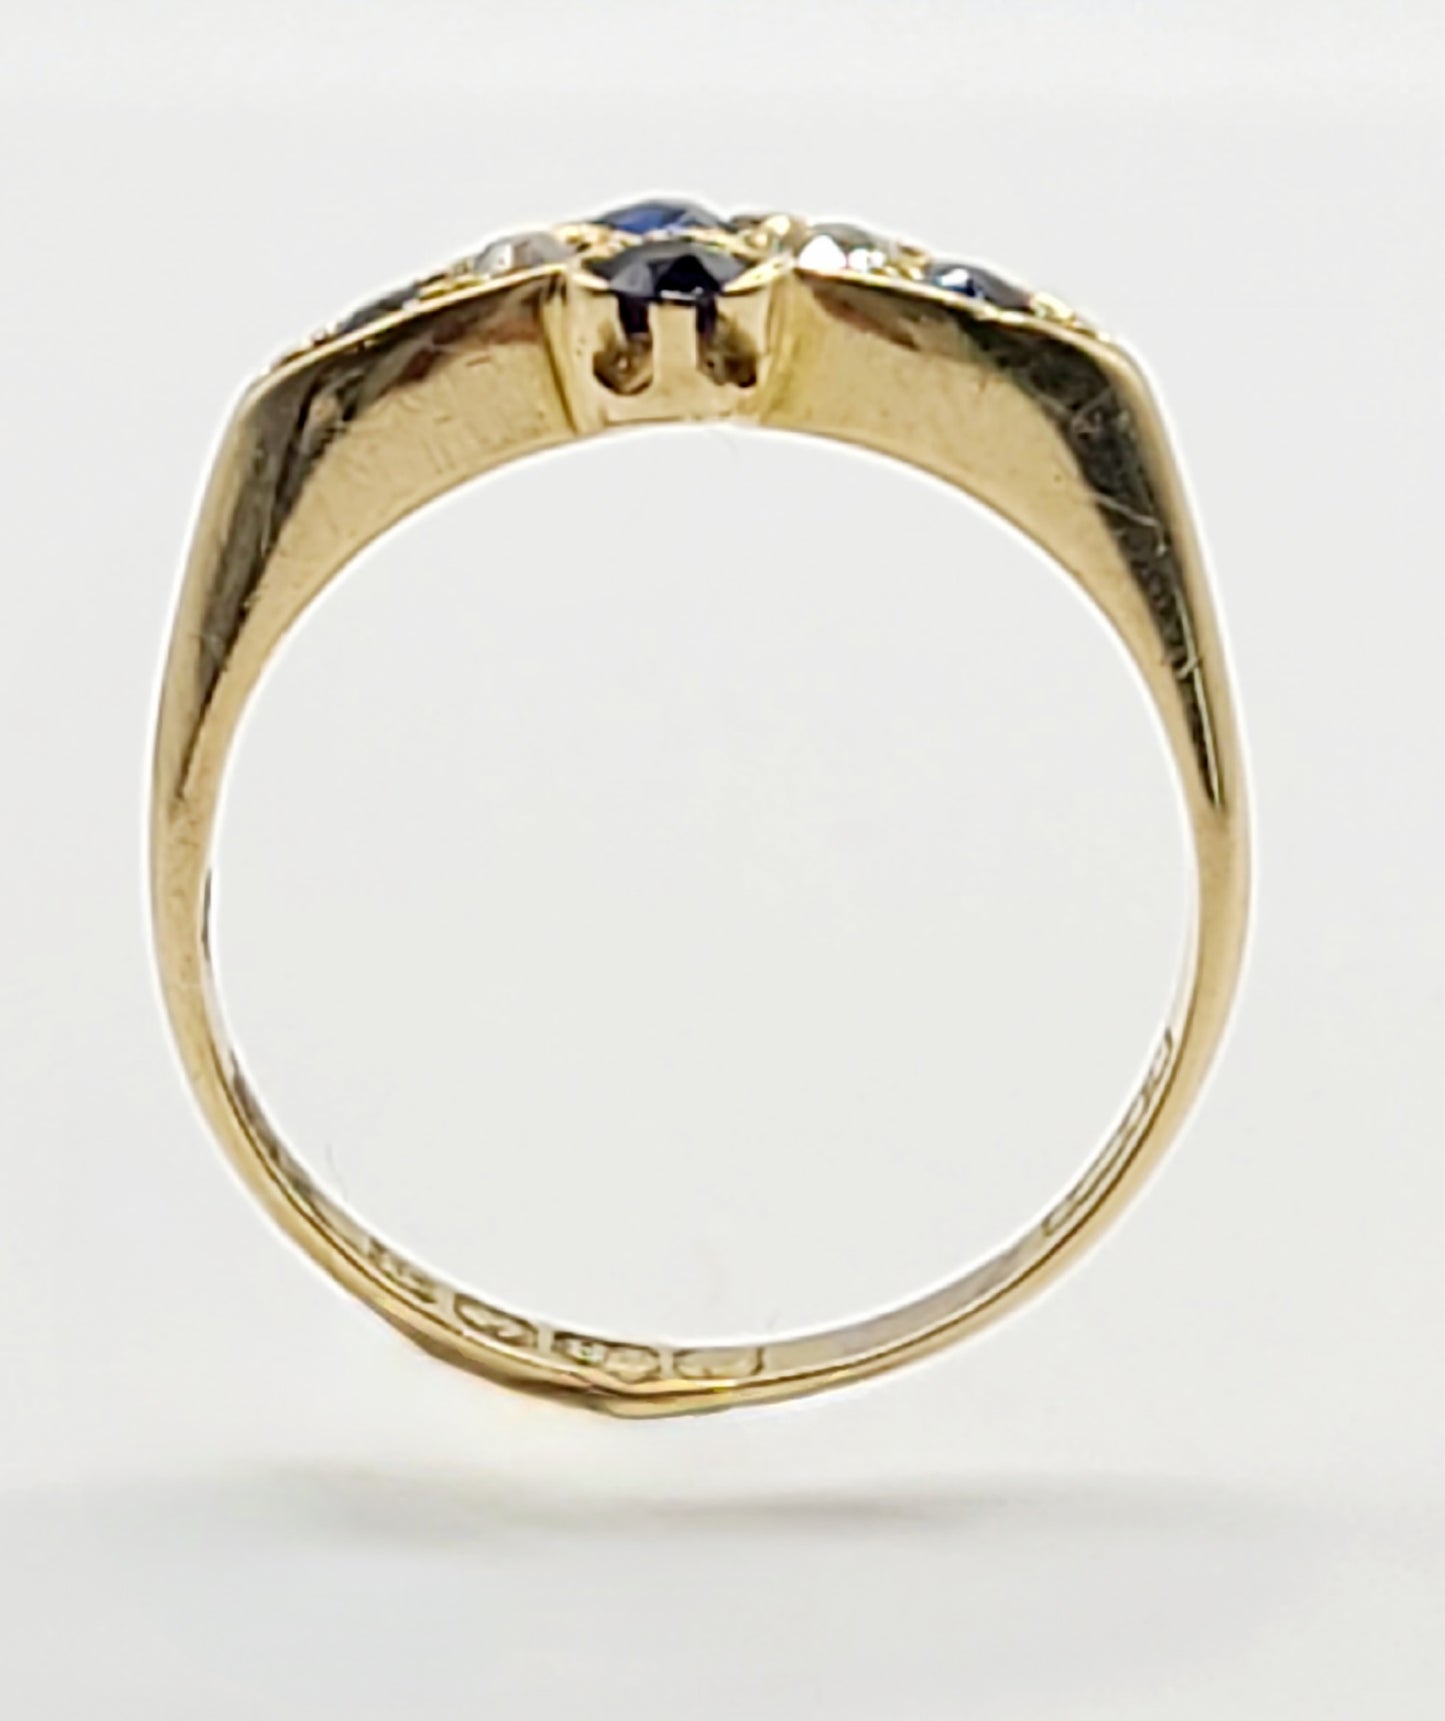 WW1 Period Rose Cut Sapphire Diamond 18ct Gold Ring